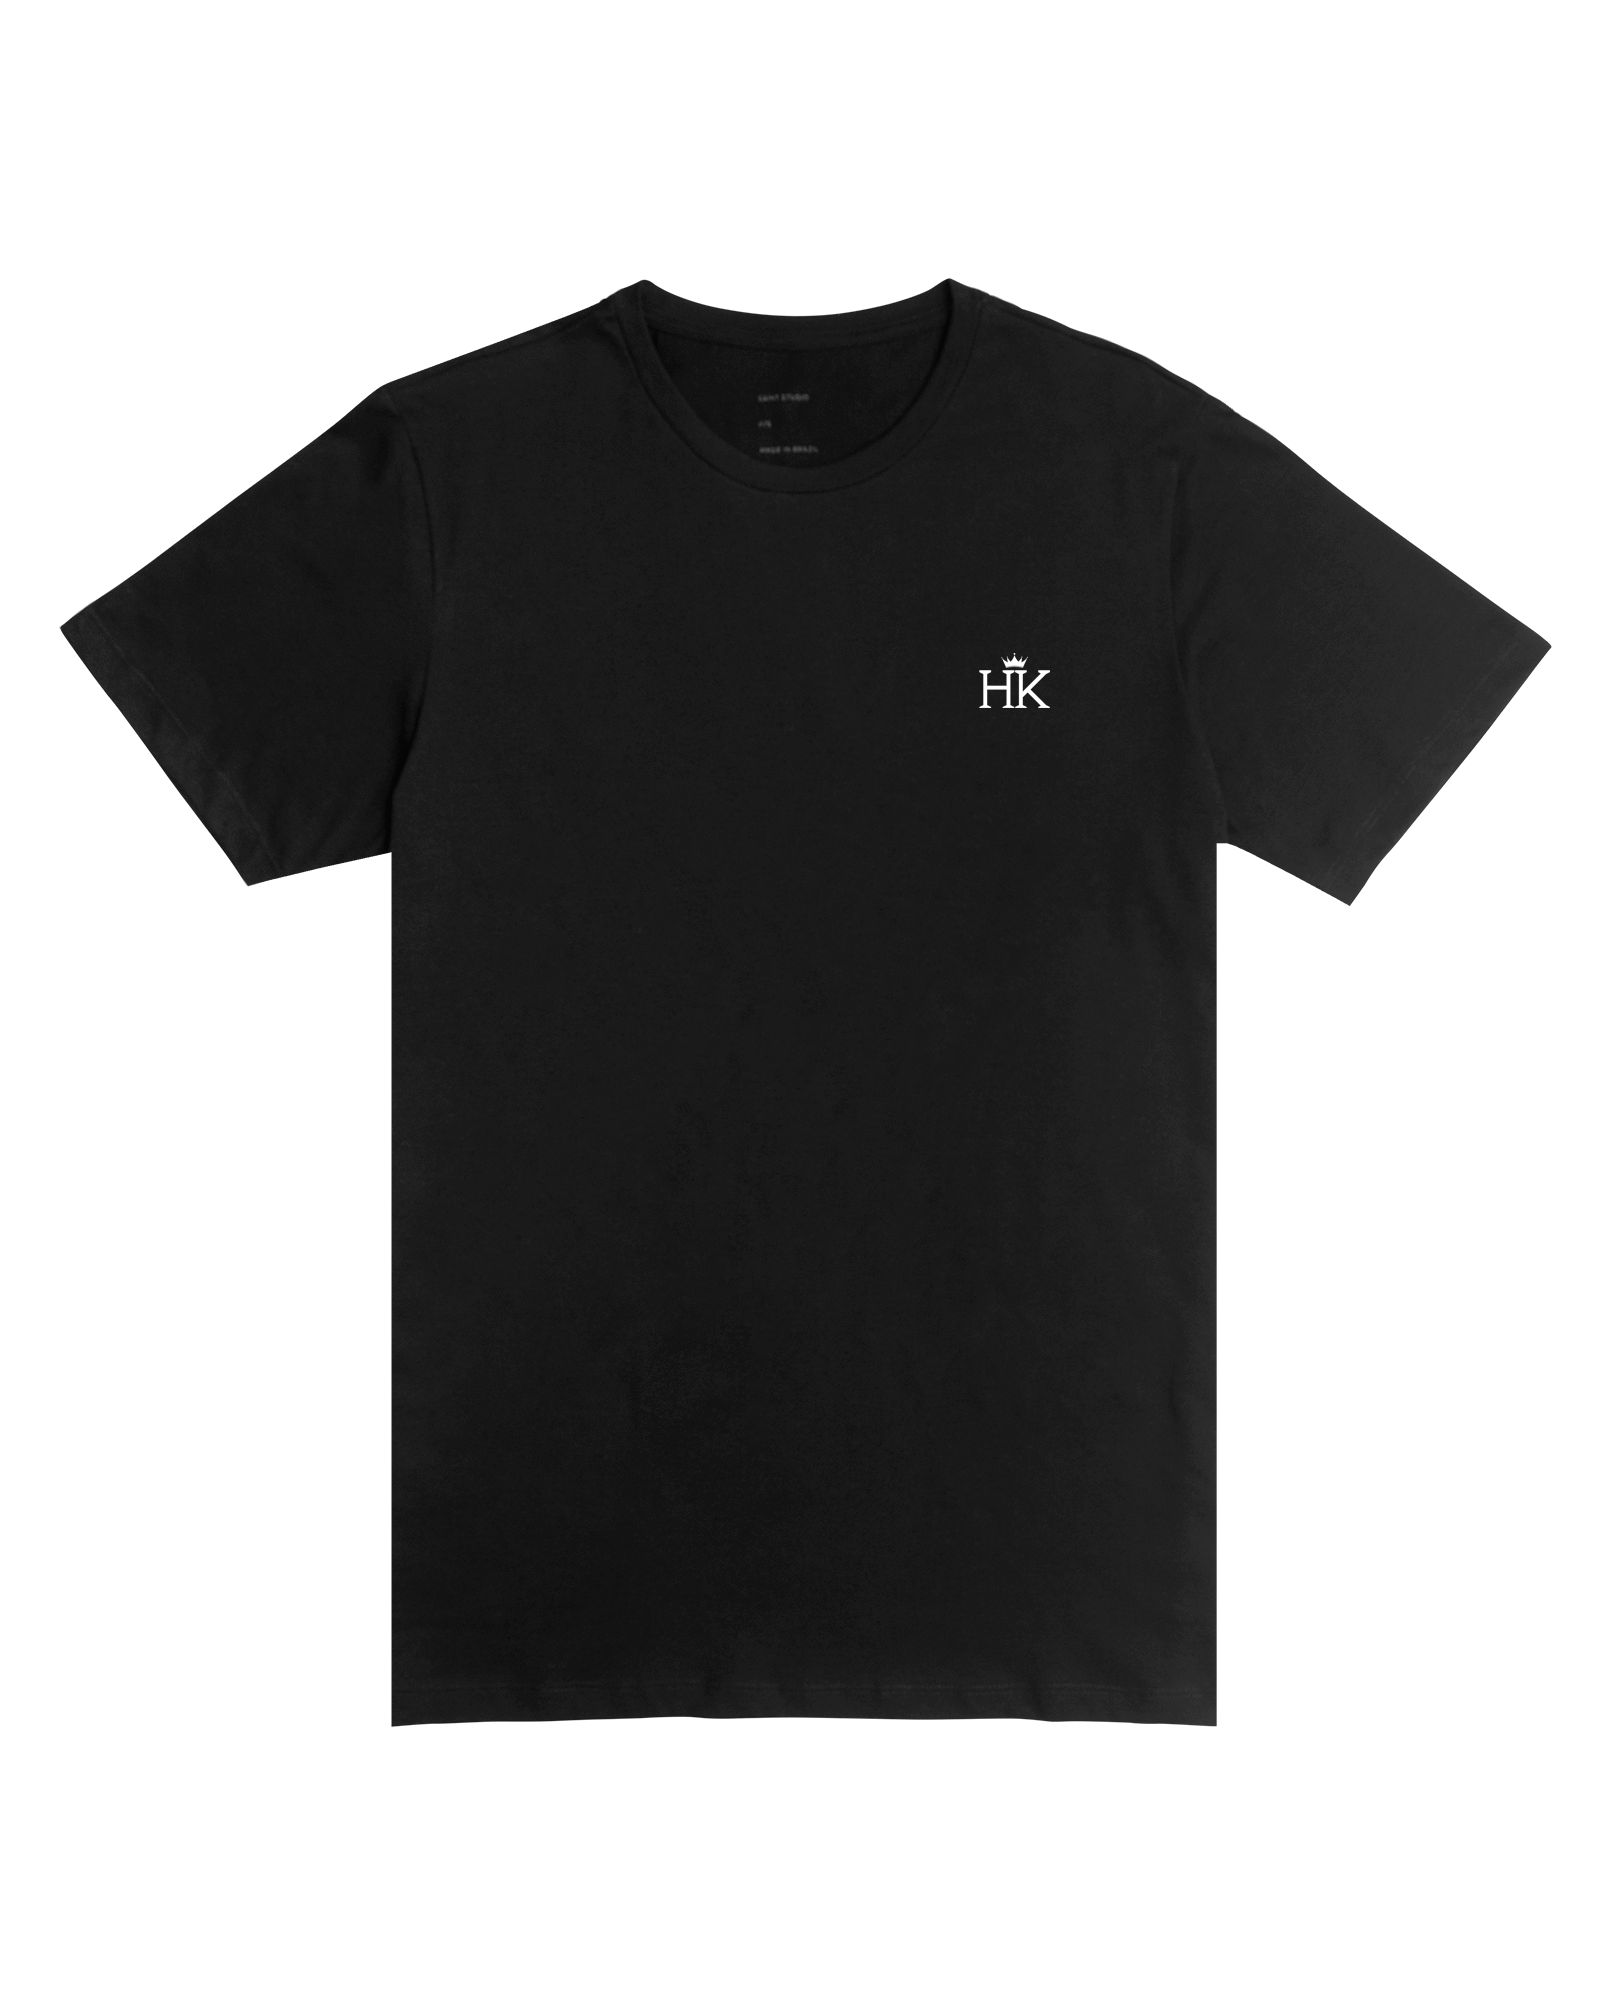 Camiseta básica preta HKSTREETWEAR  LOJA ONLINE - HK Street Wear Store -  Loja Street Wear